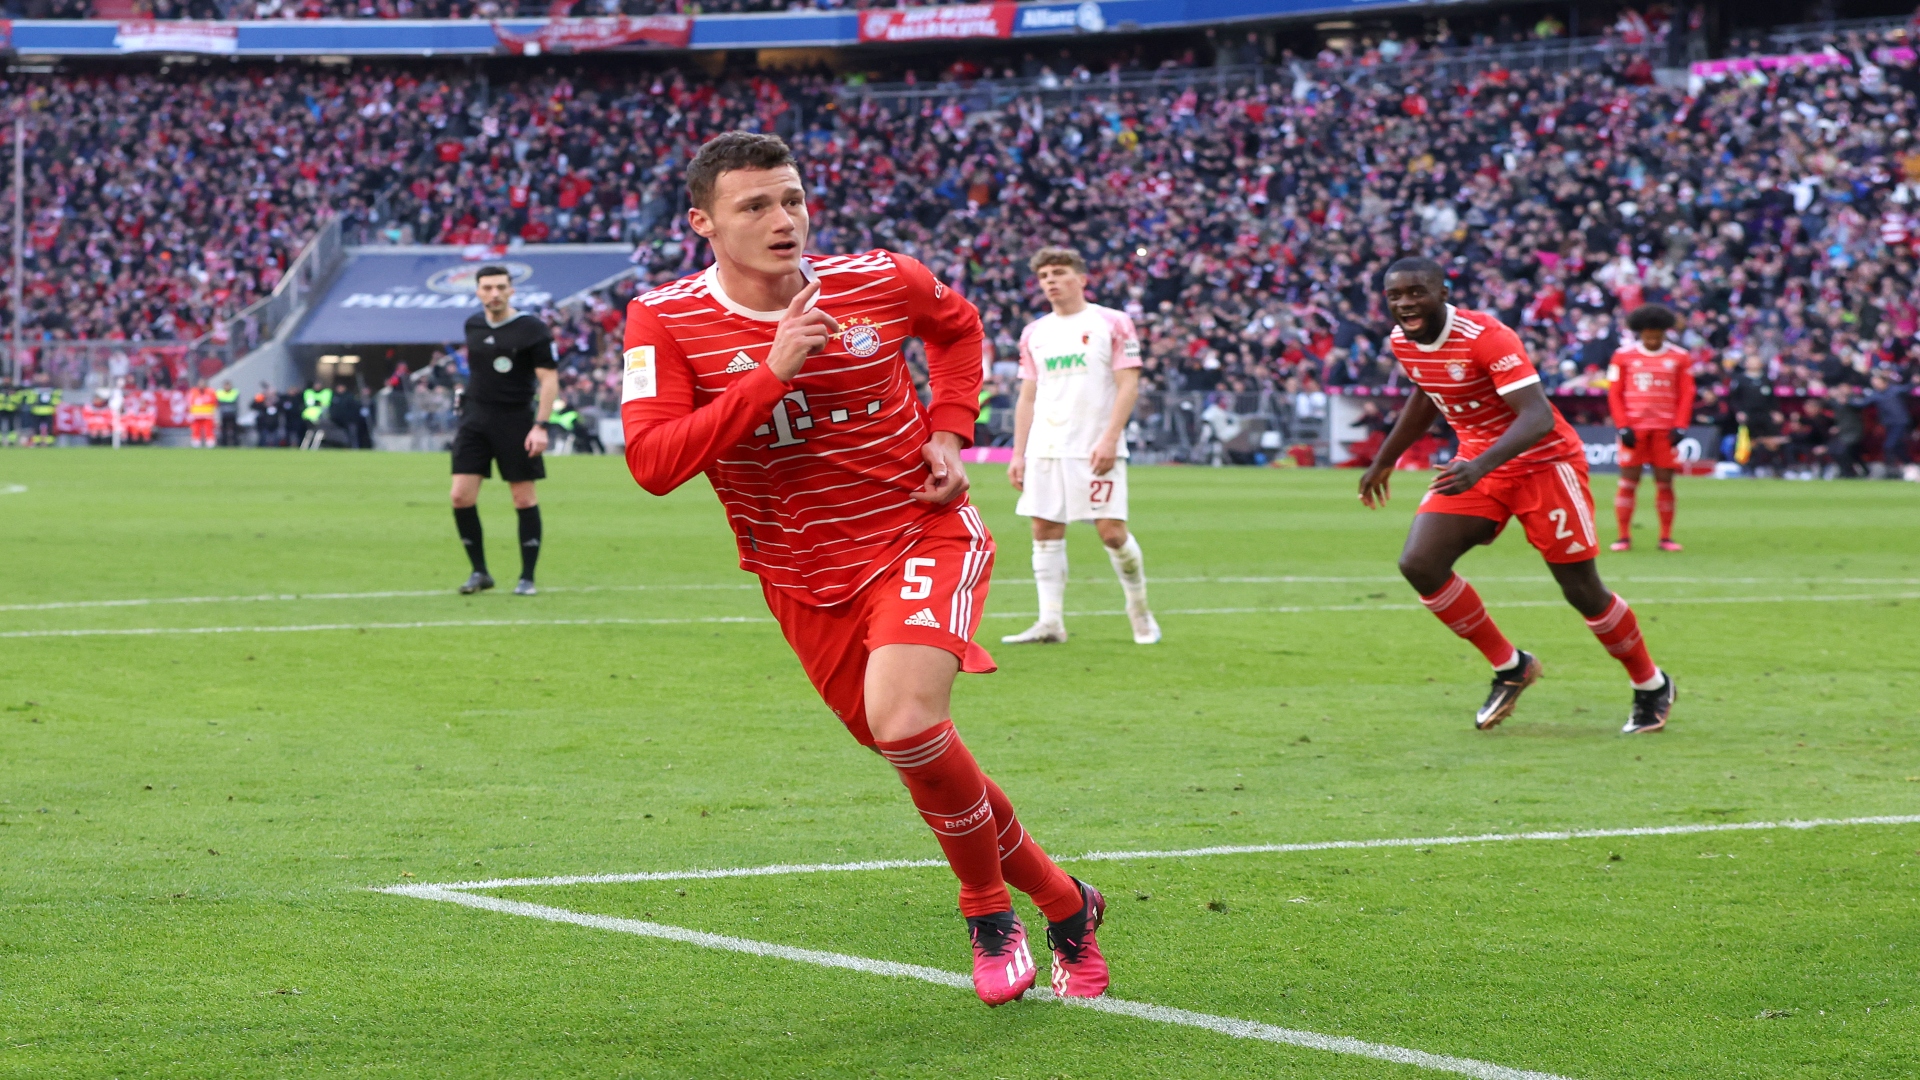 Bayern survive Galatasaray pressure, score twice in second half for 3-1 win